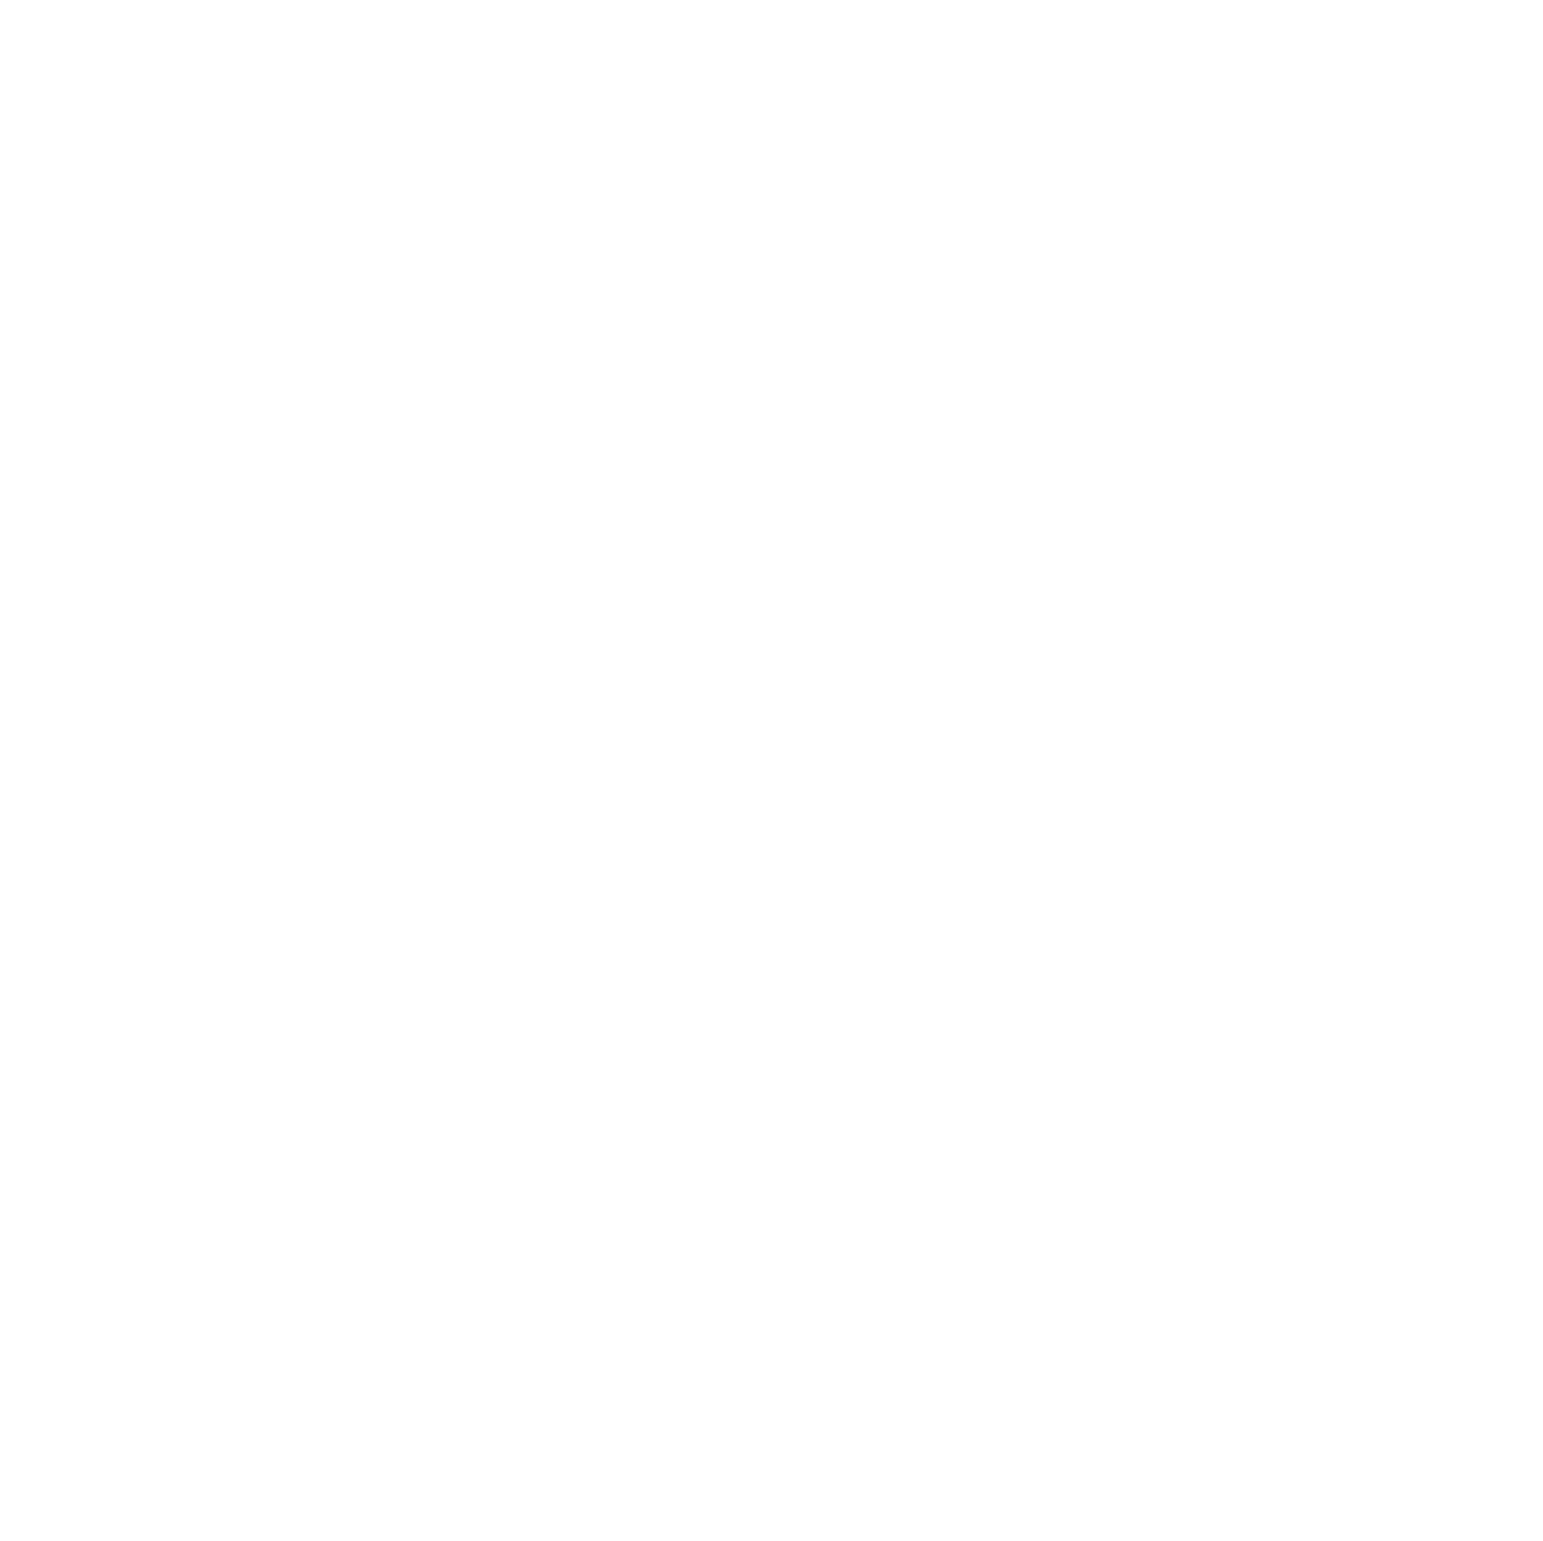 Emcor logo pour fonds sombres (PNG transparent)